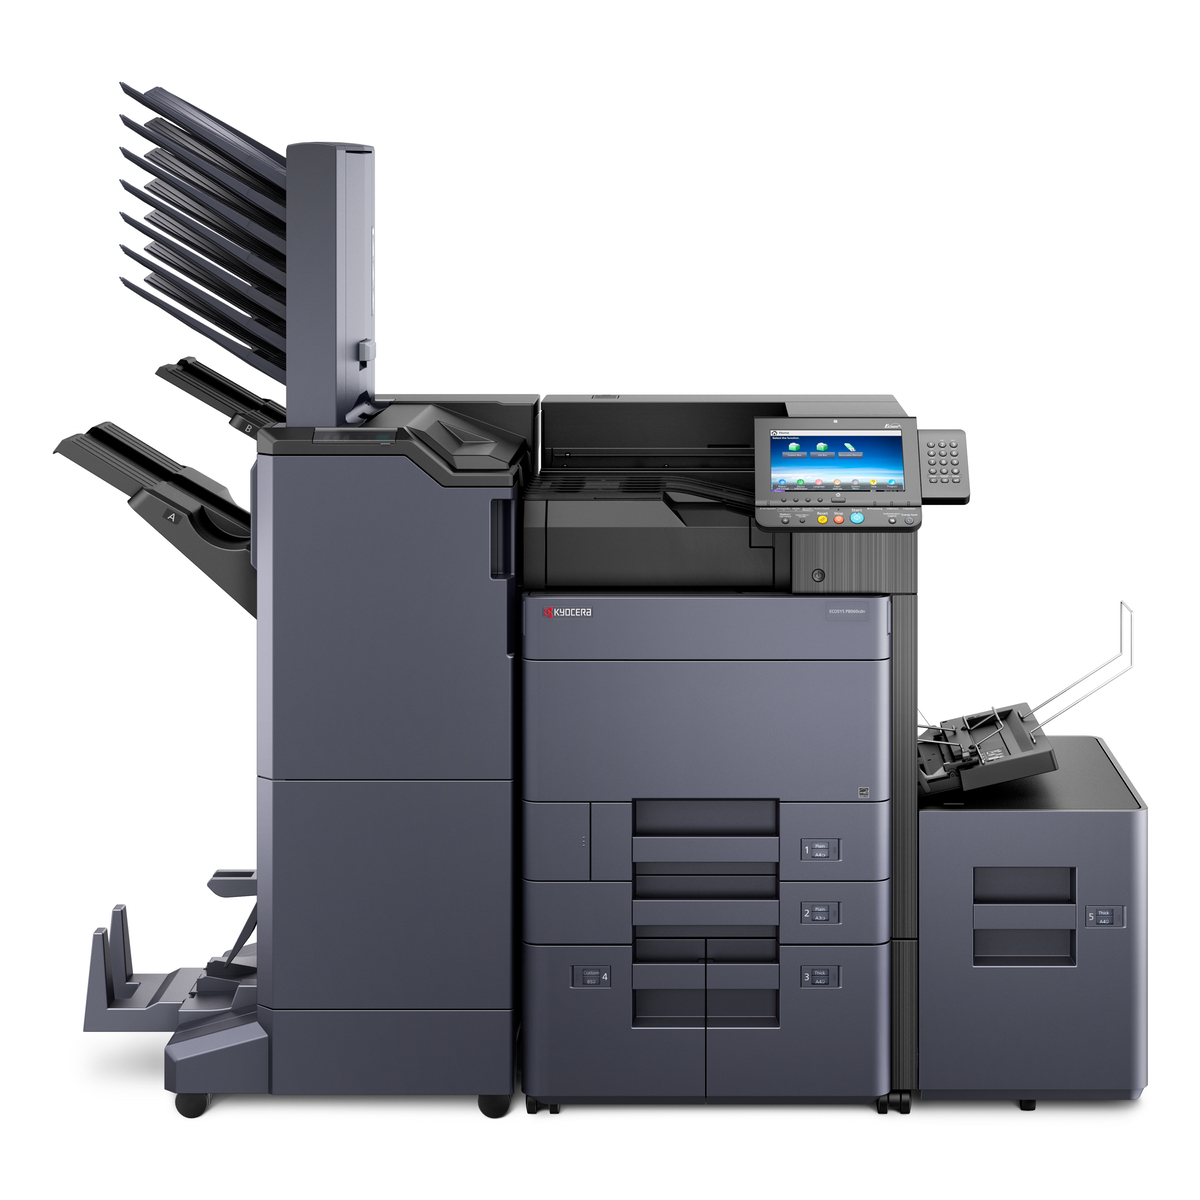 Kyocera Printers:  The Kyocera ECOSYS P8060cdn Printer